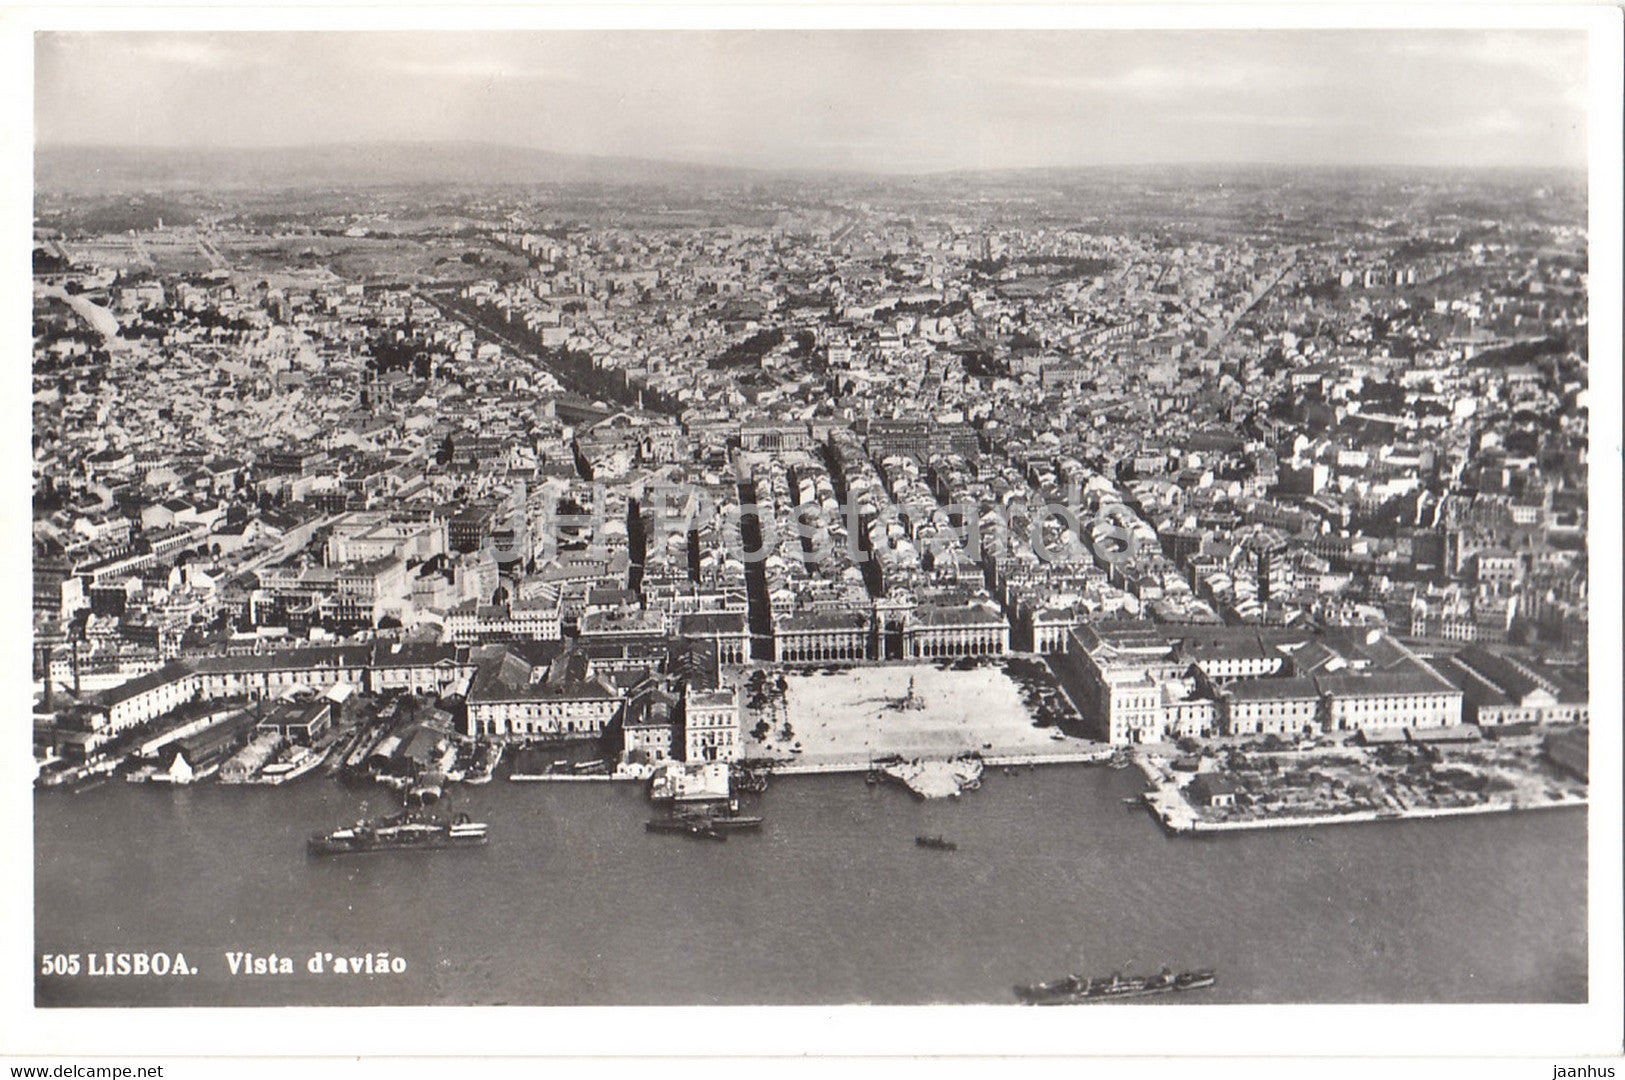 Lisboa - Lisbon - Vista d'aviao - 505 - old postcard - 1954 - Portugal - used - JH Postcards